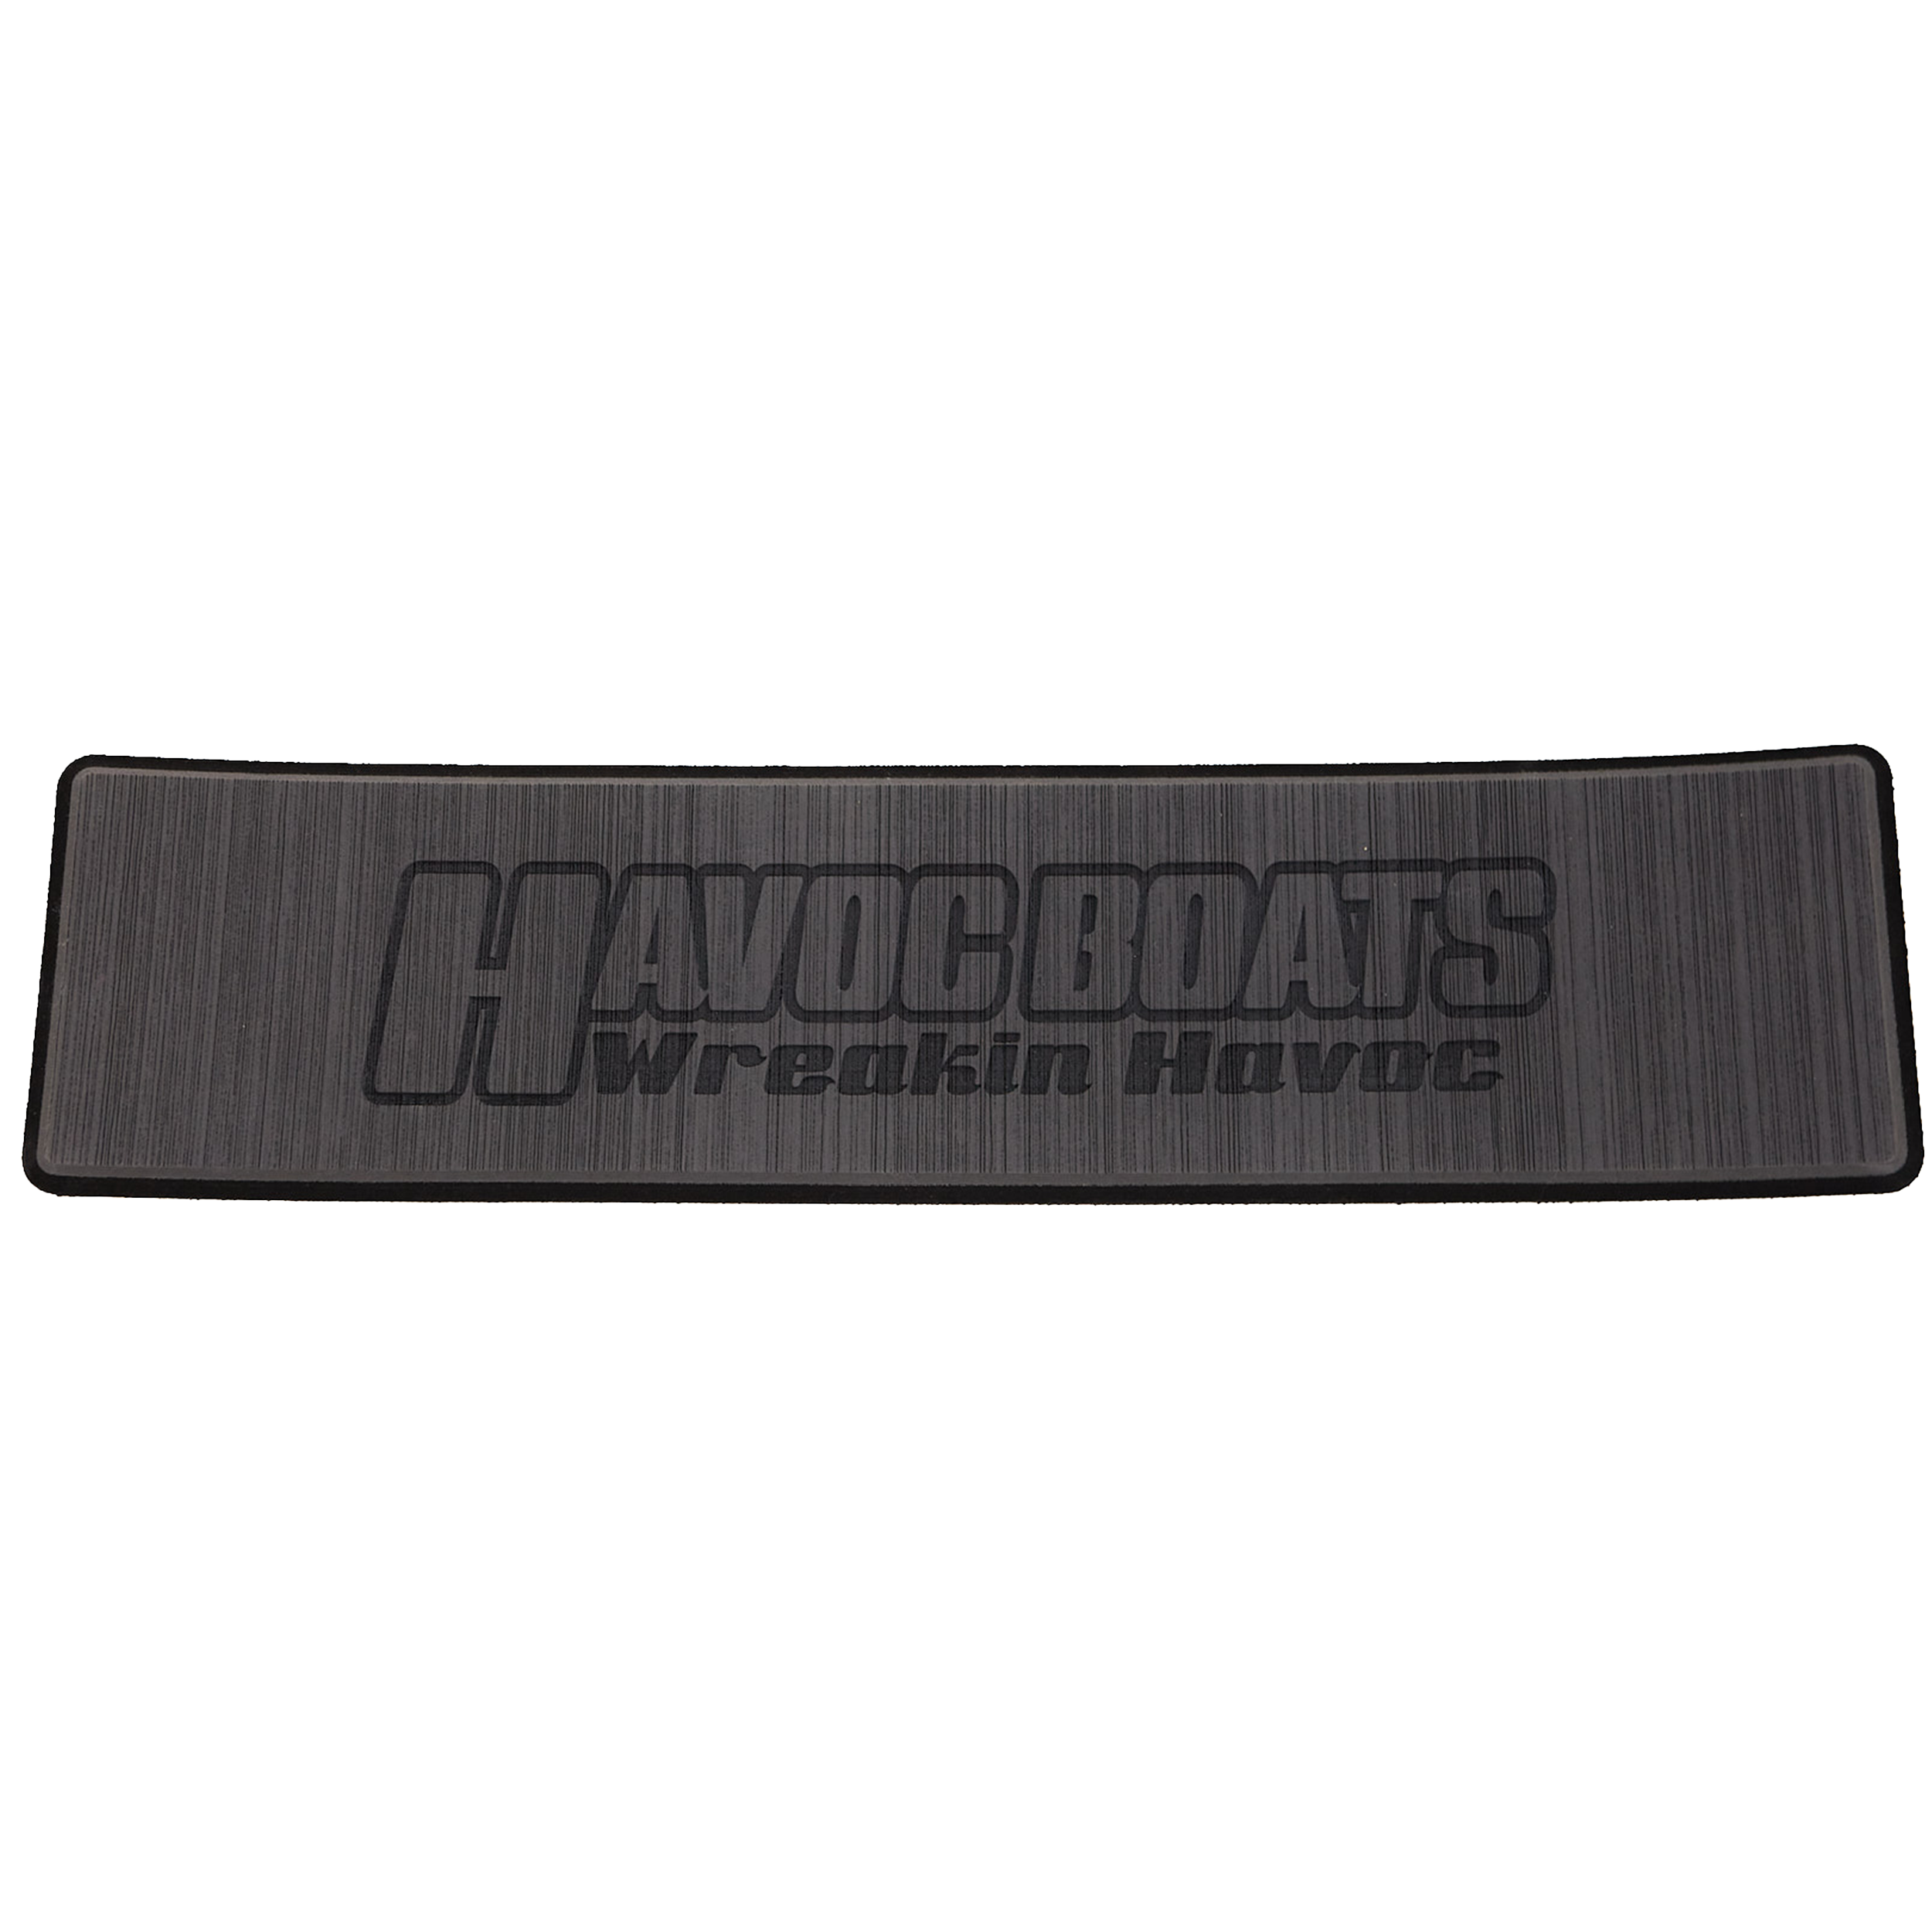 Havoc Trailer Fender Pad 6" X 24"